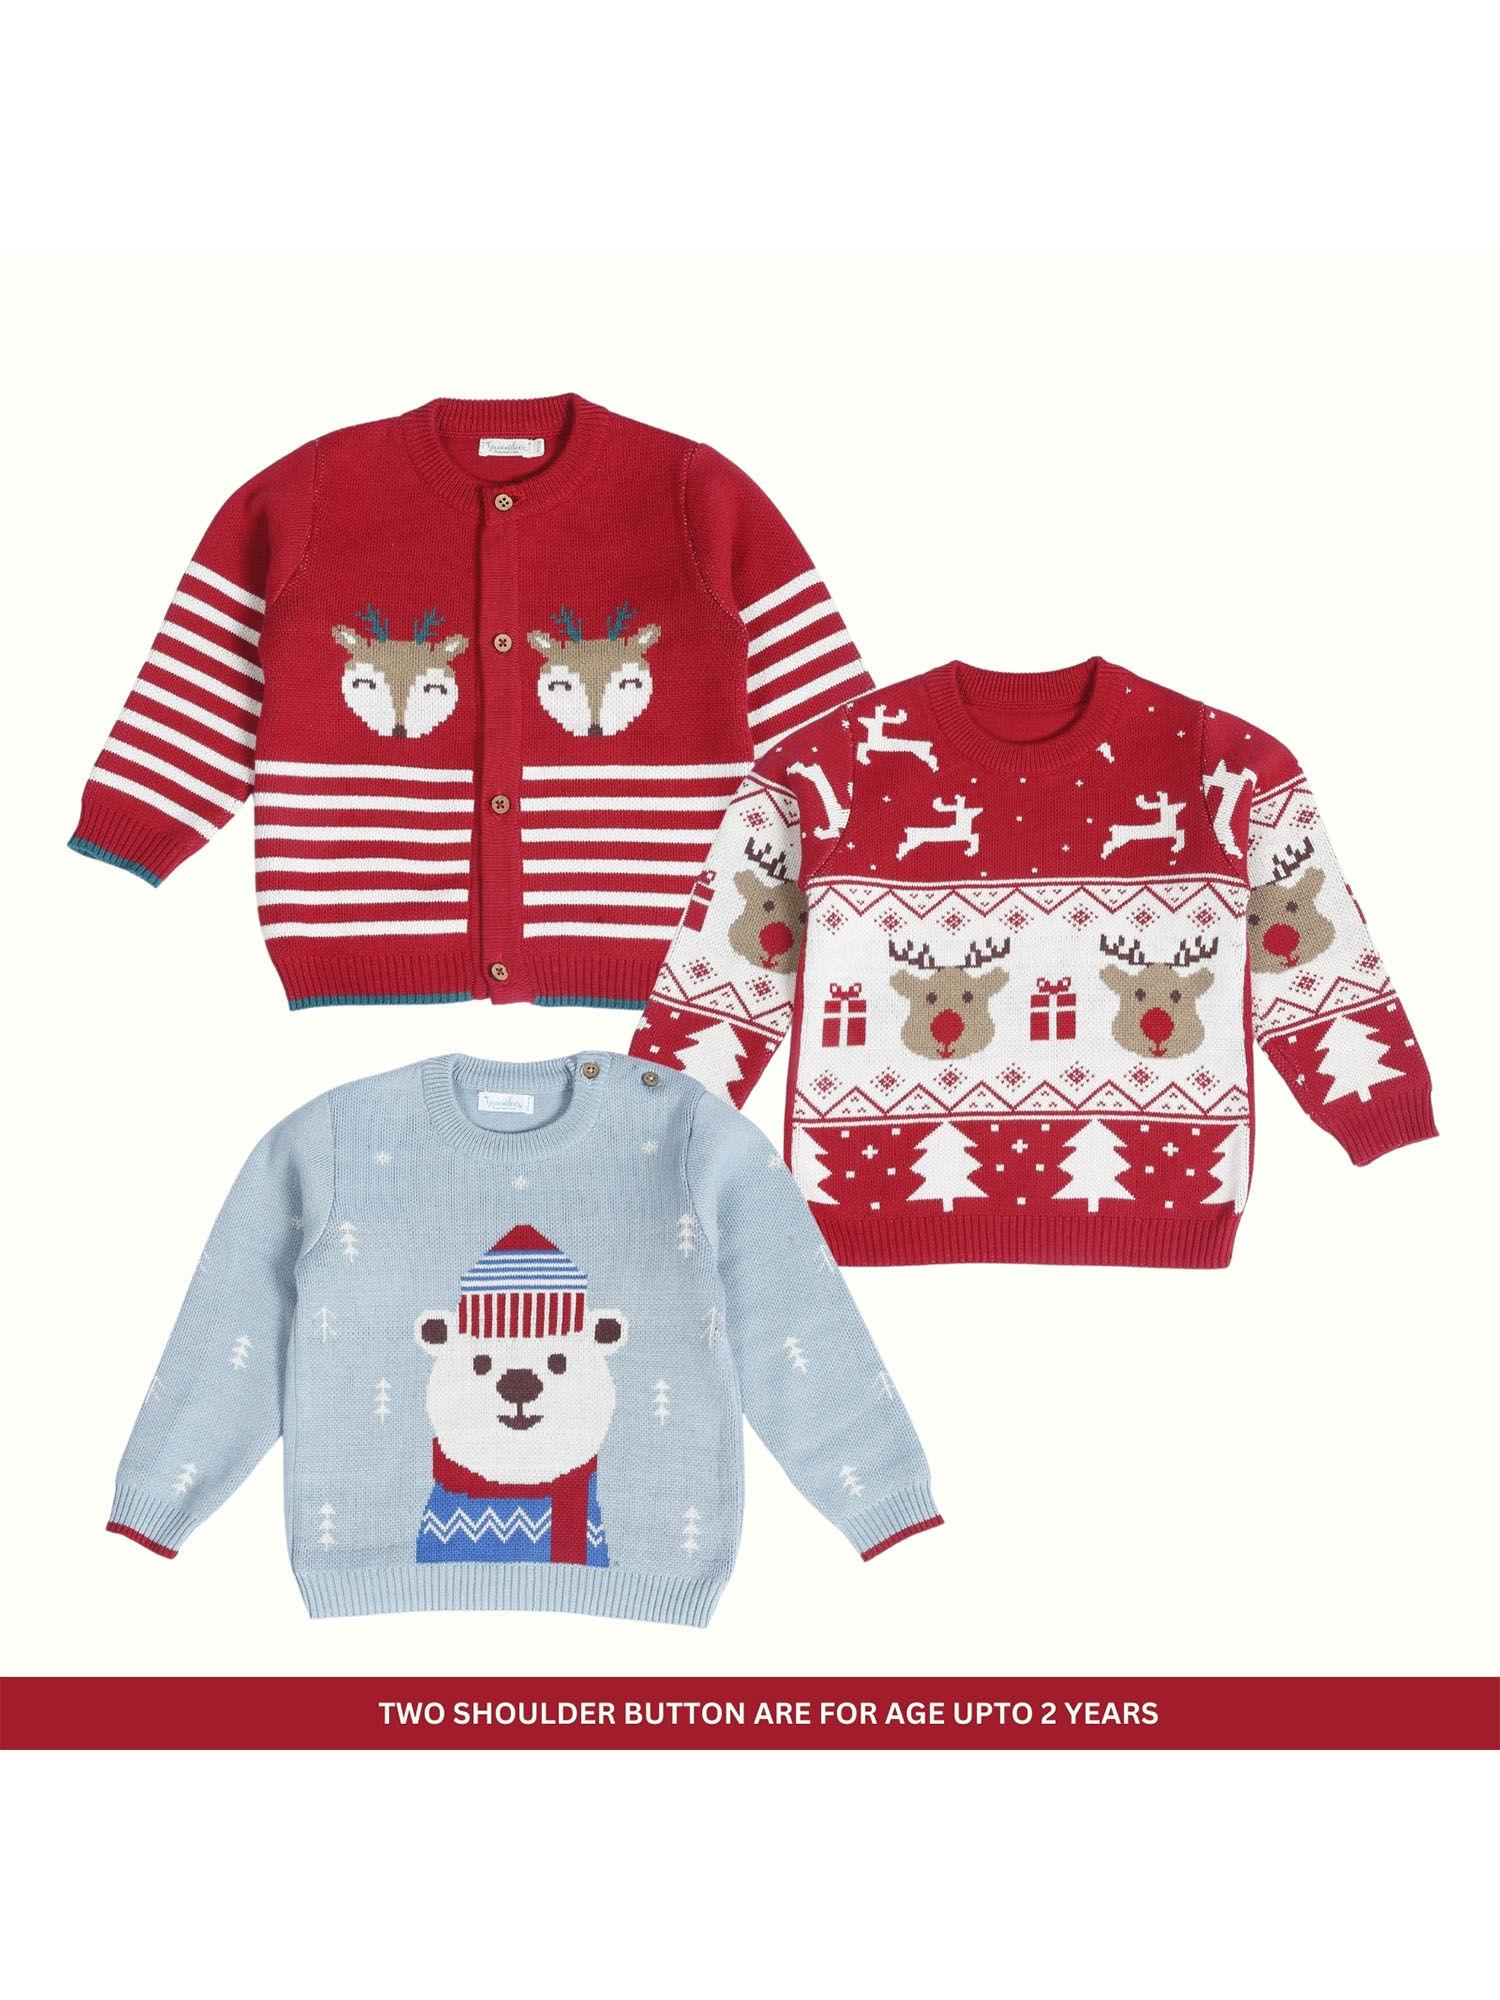 jaunty-reindeer-joyful-reindeer-hearth-warming-bear-3-sweaters-(set-of-2)